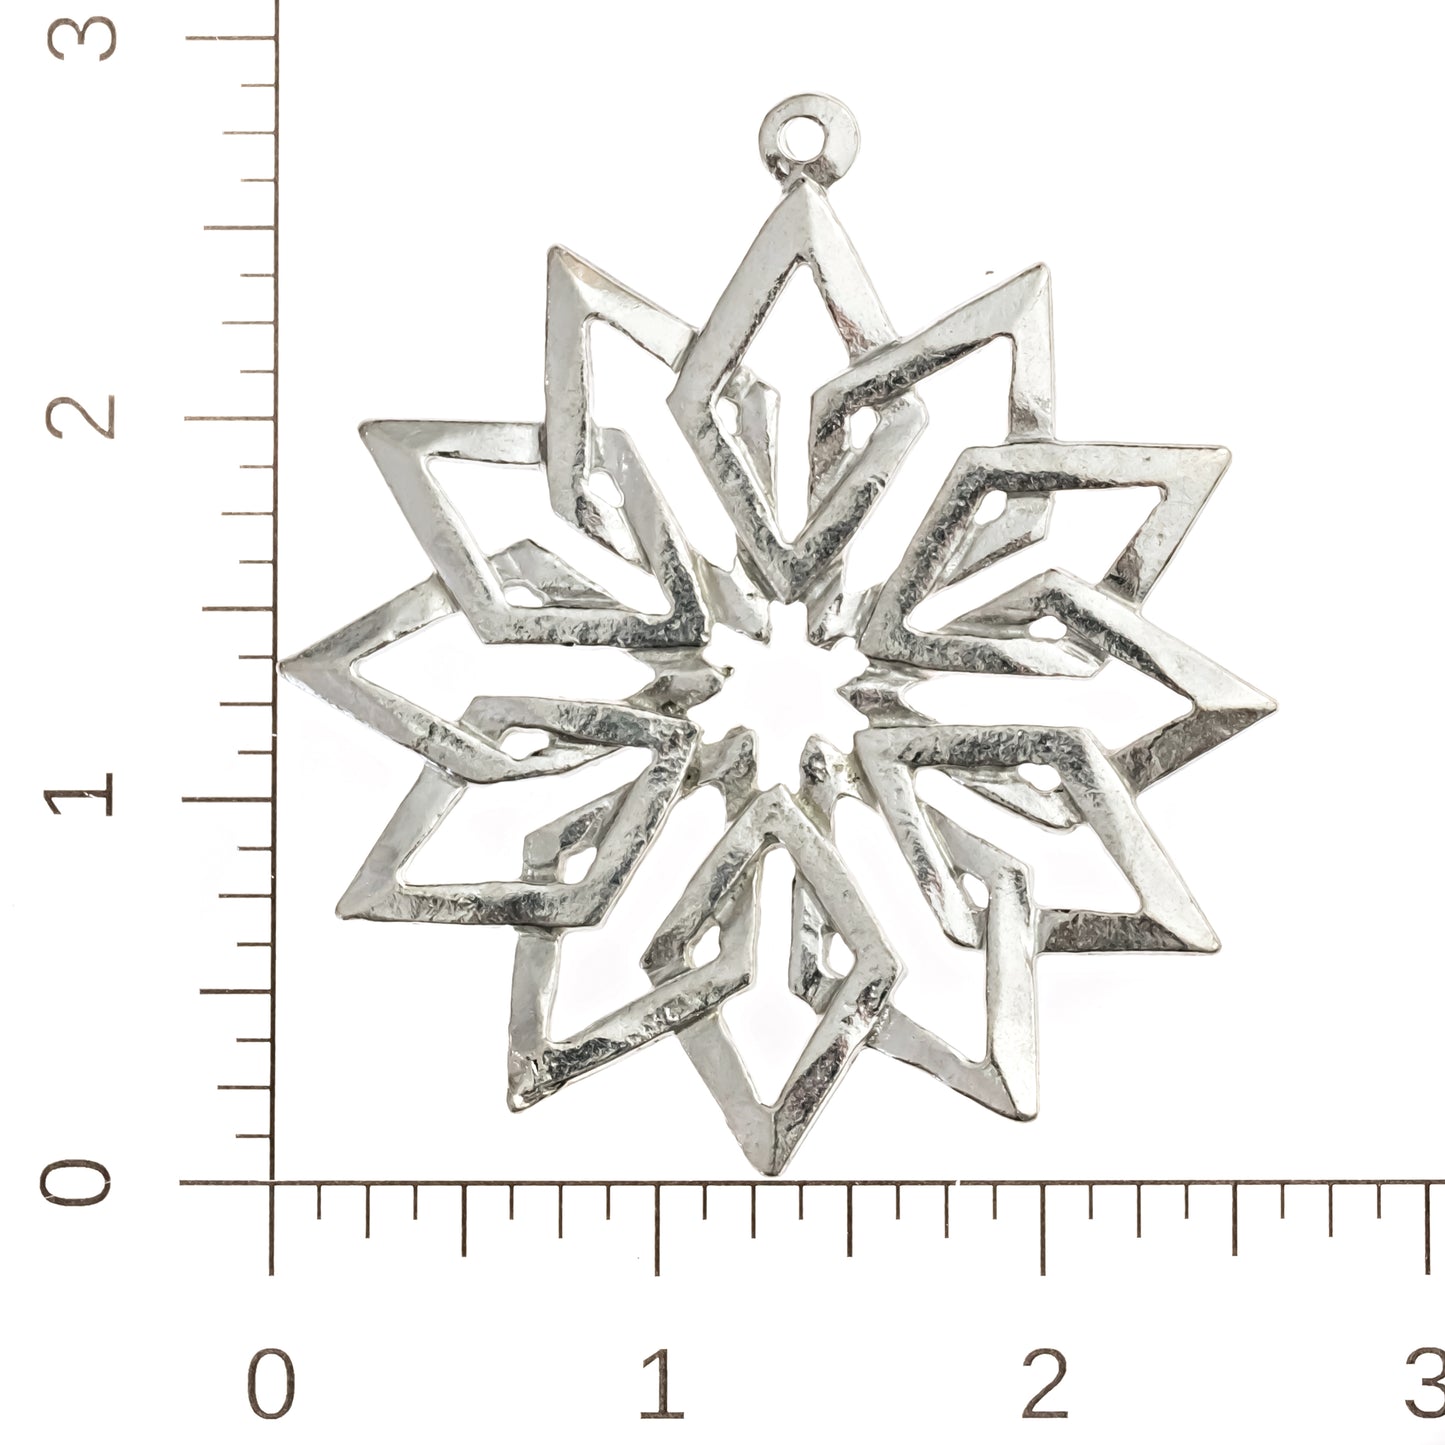 Snowflake Gifts - Snowflake Jewelry - Snowflake Pendant - Snowflake Necklaces - Several Designs